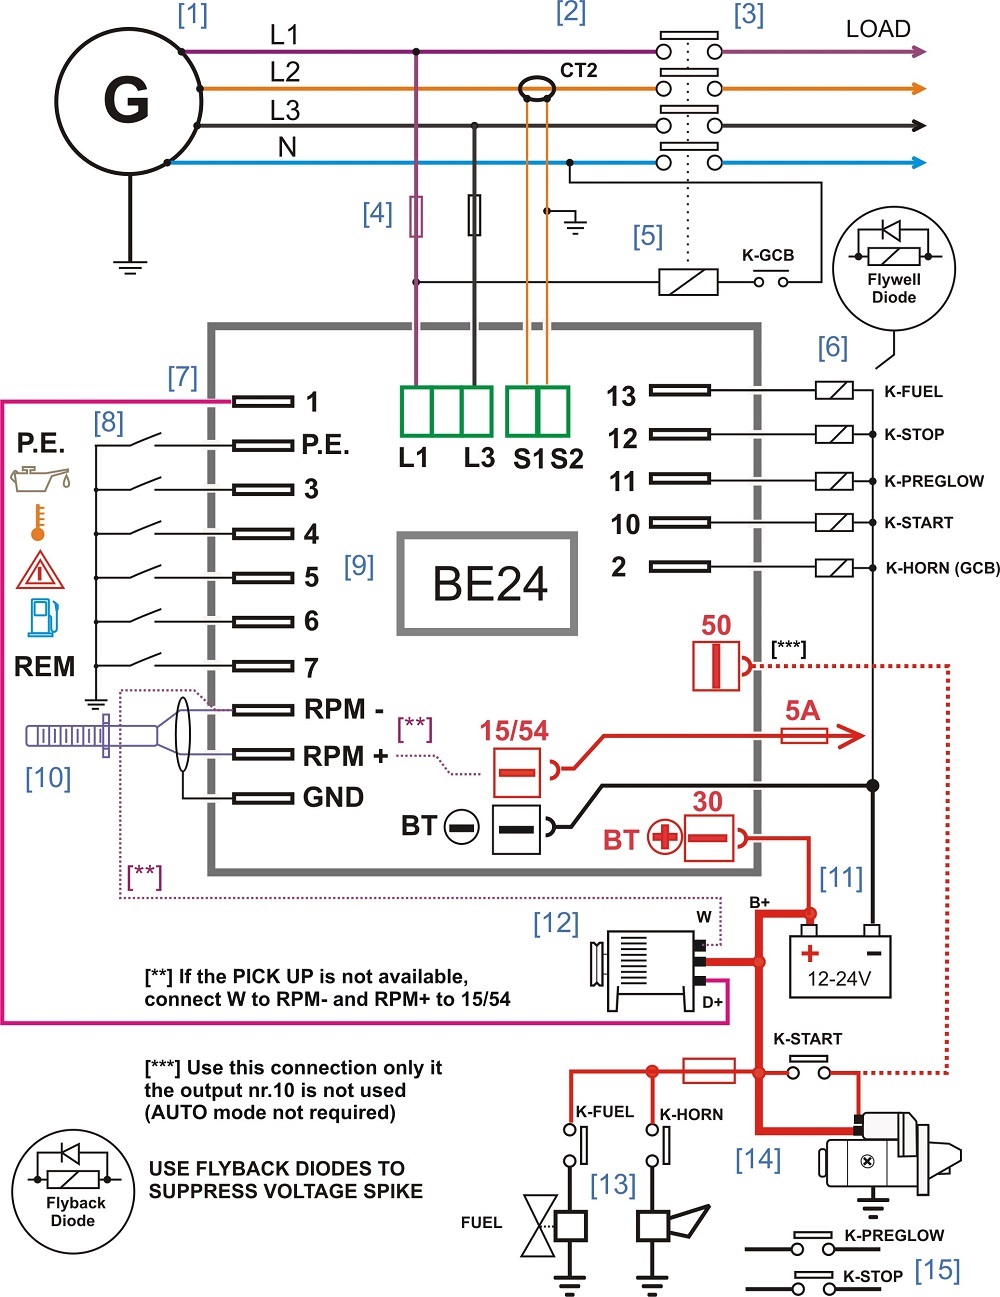 Diesel generator control panel wiring diagram